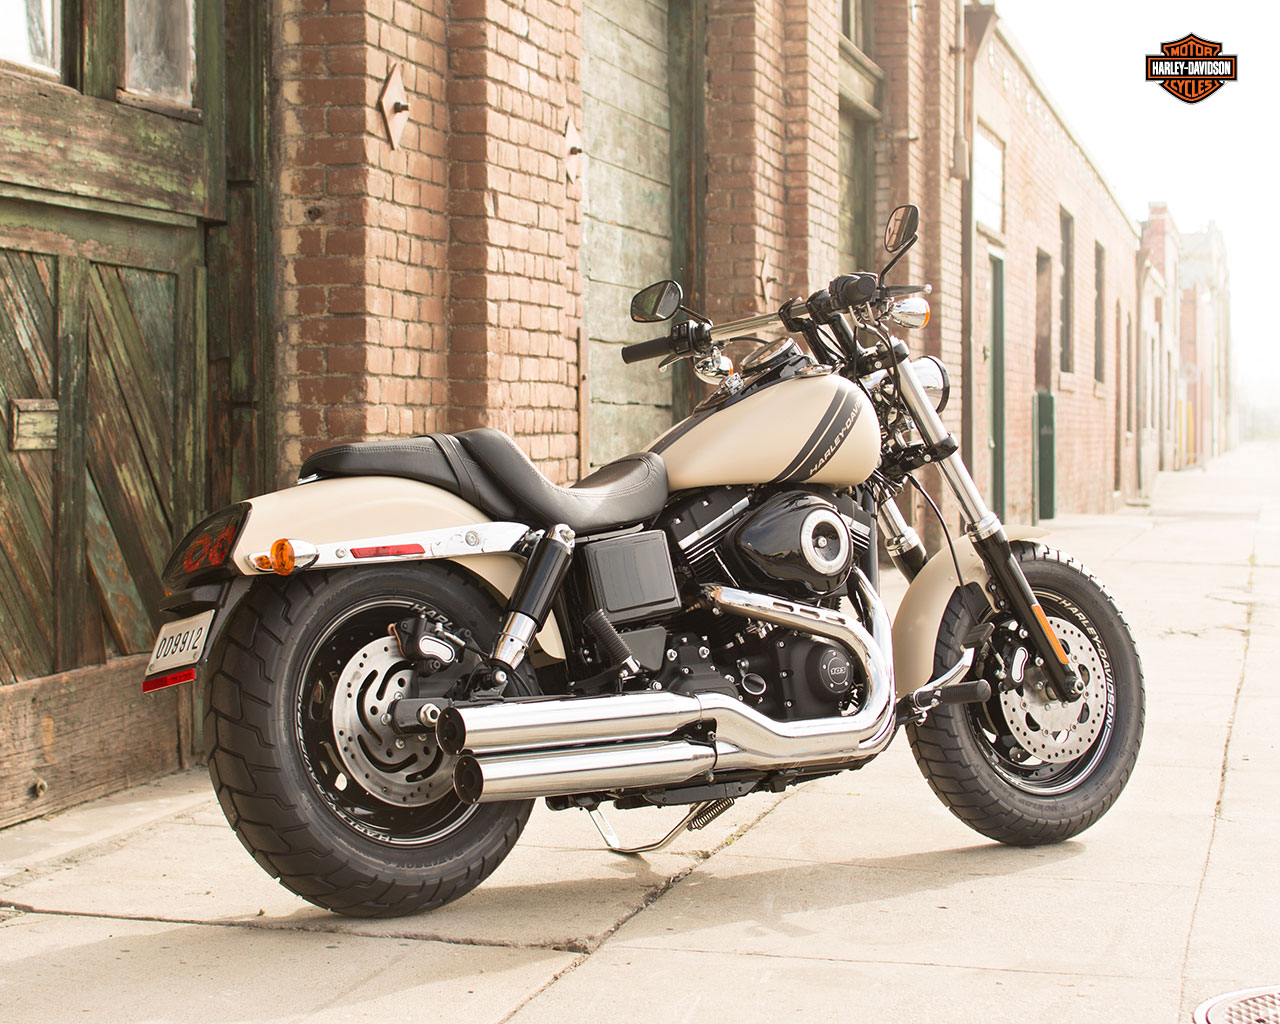 2015 Harley Davidson Fxdf Fat Bob Review